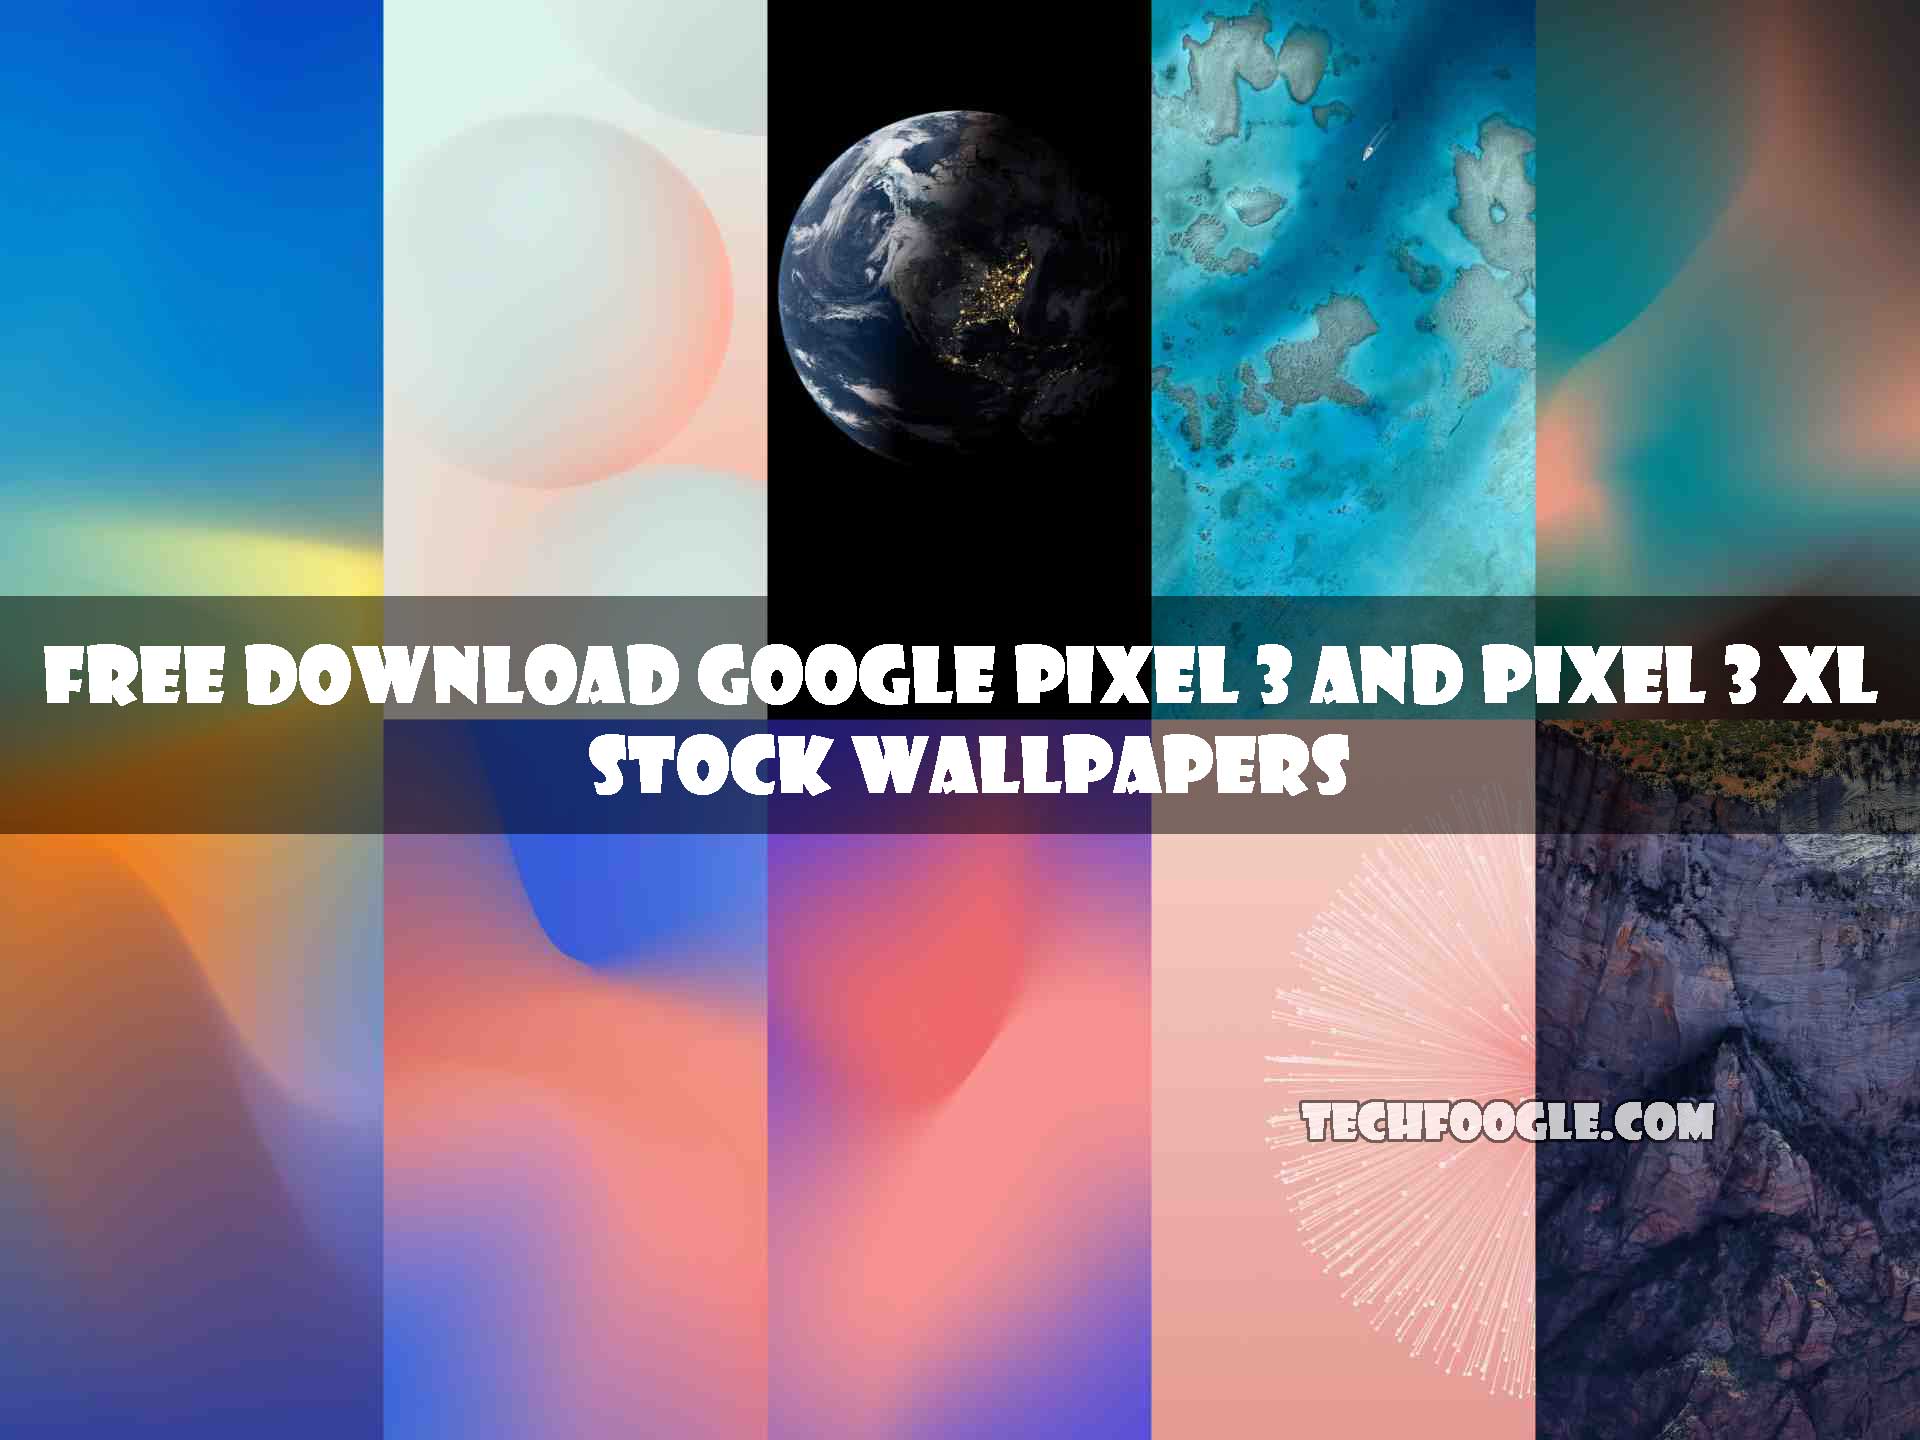 Free Download Google Pixel 3 and Pixel 3 XL Stock Wallpapers - TechFoogle